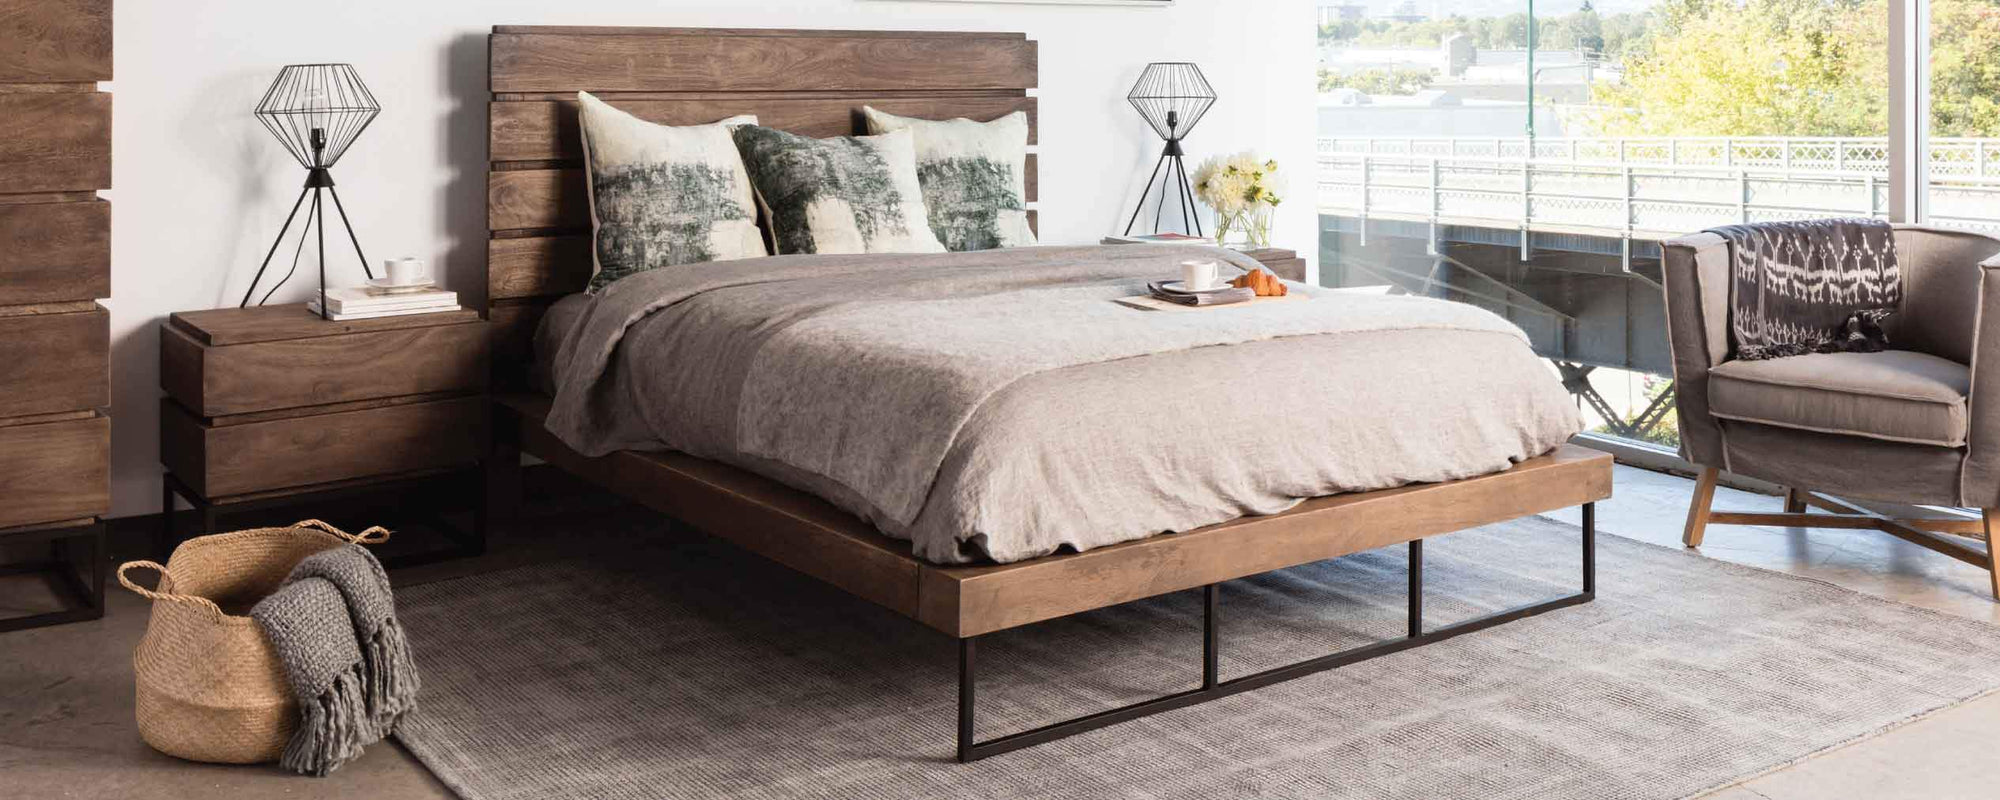 industrial bedroom furniture cheap